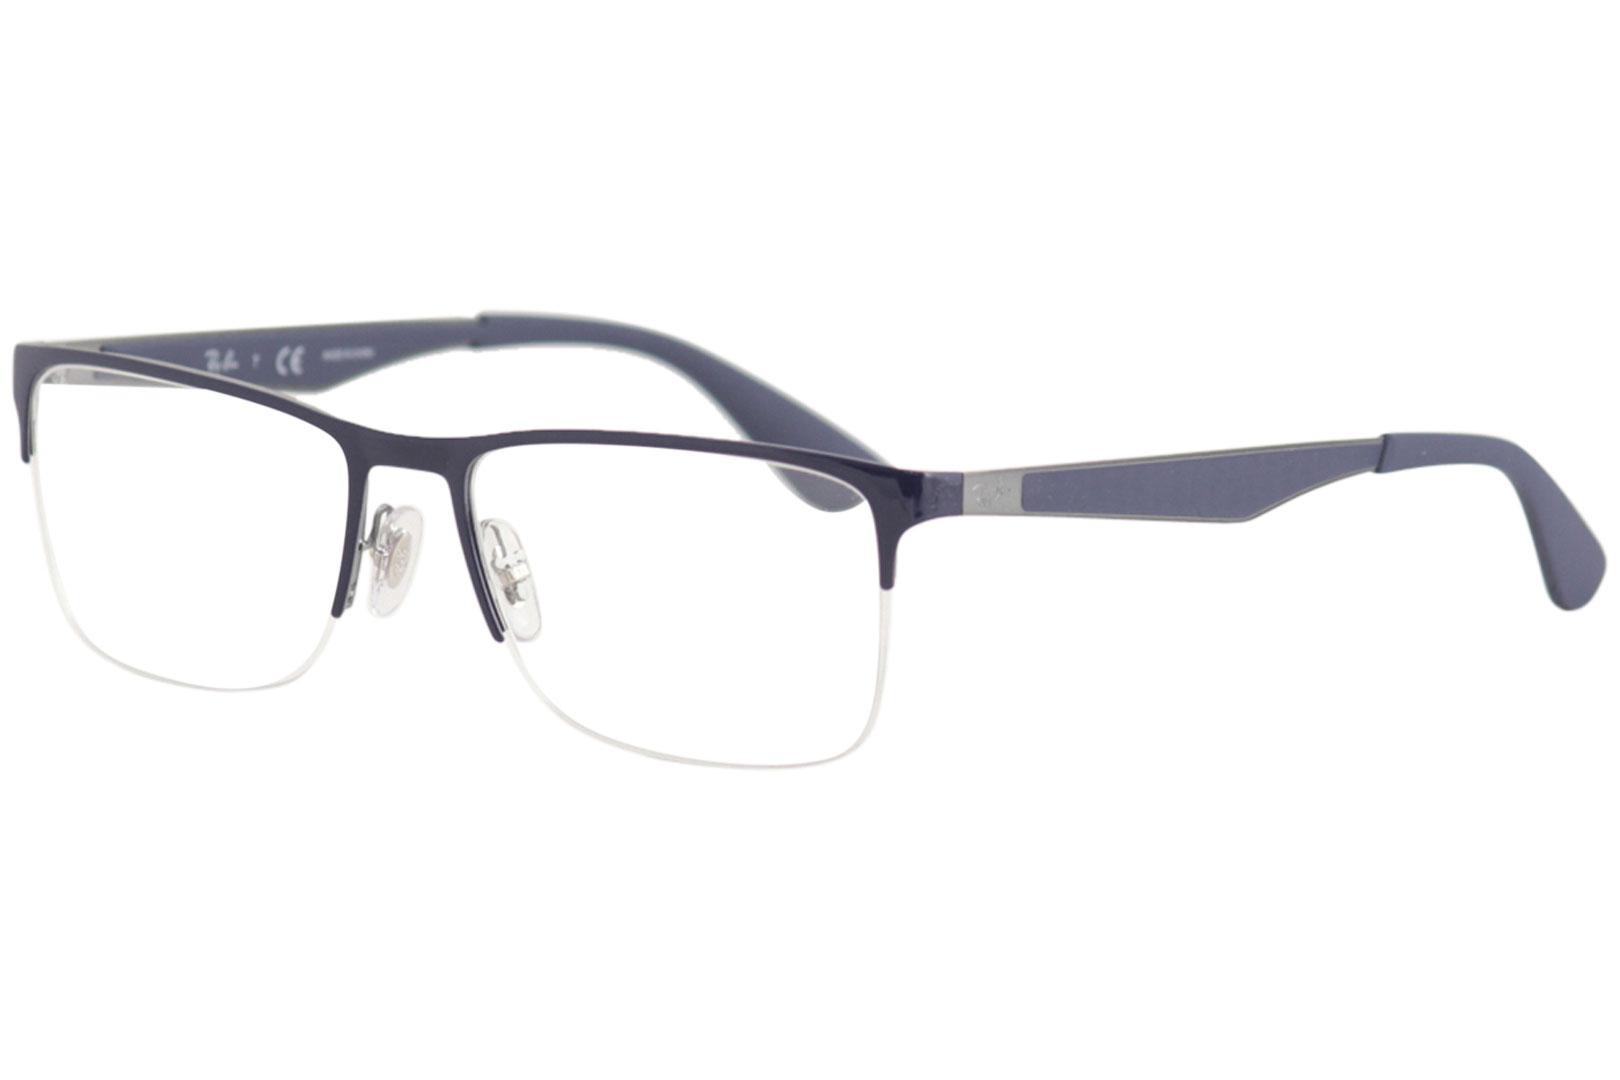 Ray Ban Mens Eyeglasses Rb6335 Rb6335 Rayban Half Rim Optical Frame 